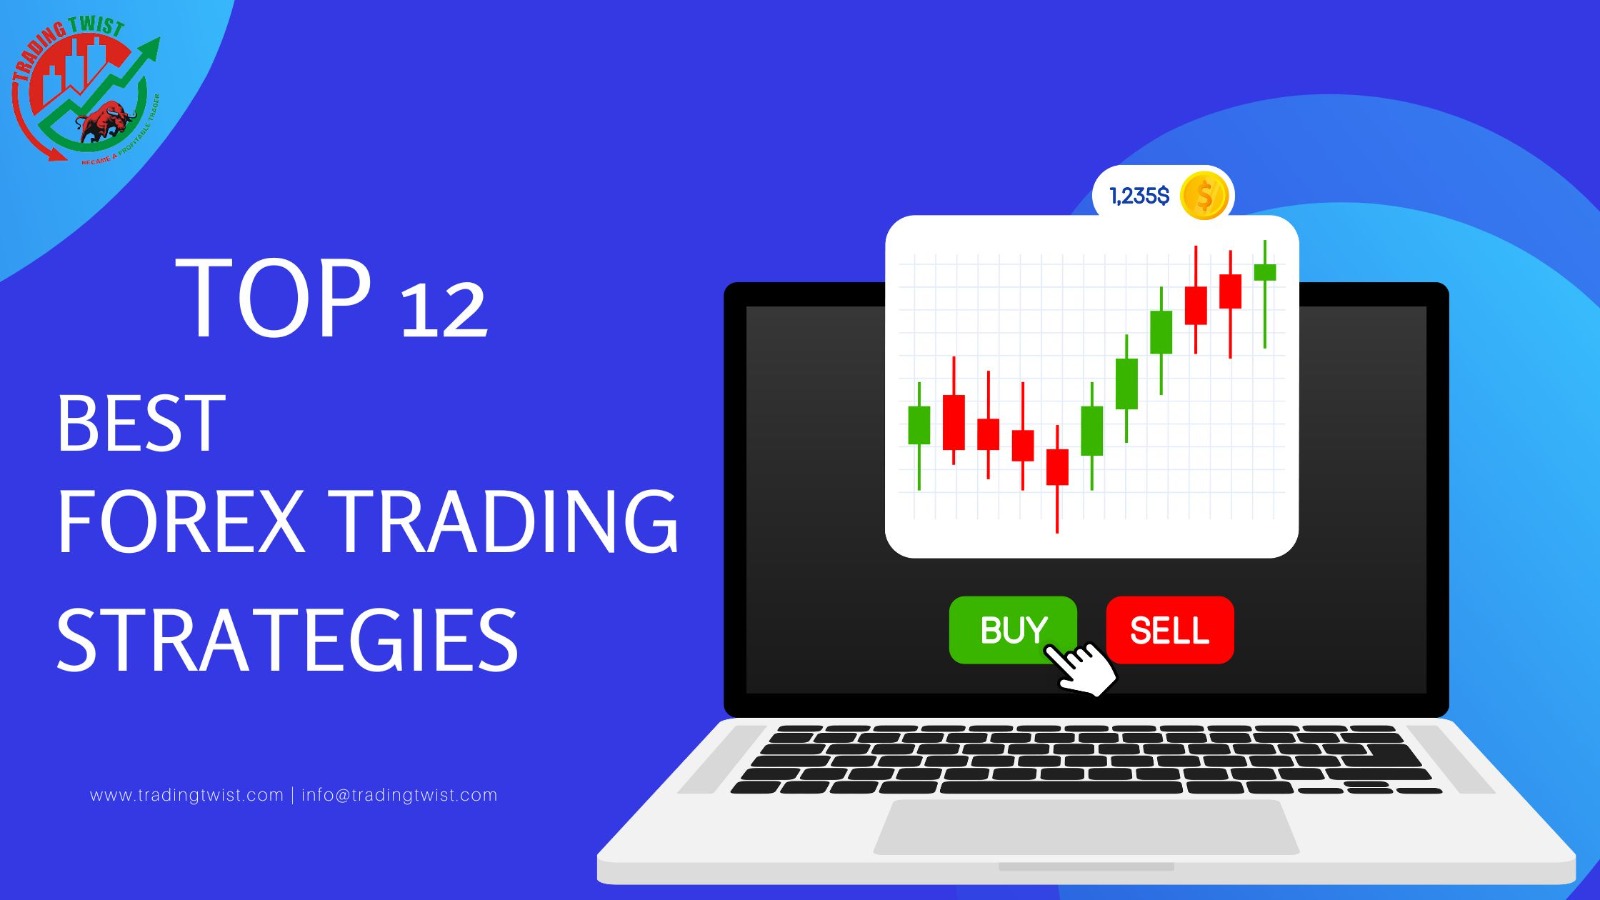 Top 12 Best Forex Trading Strategies